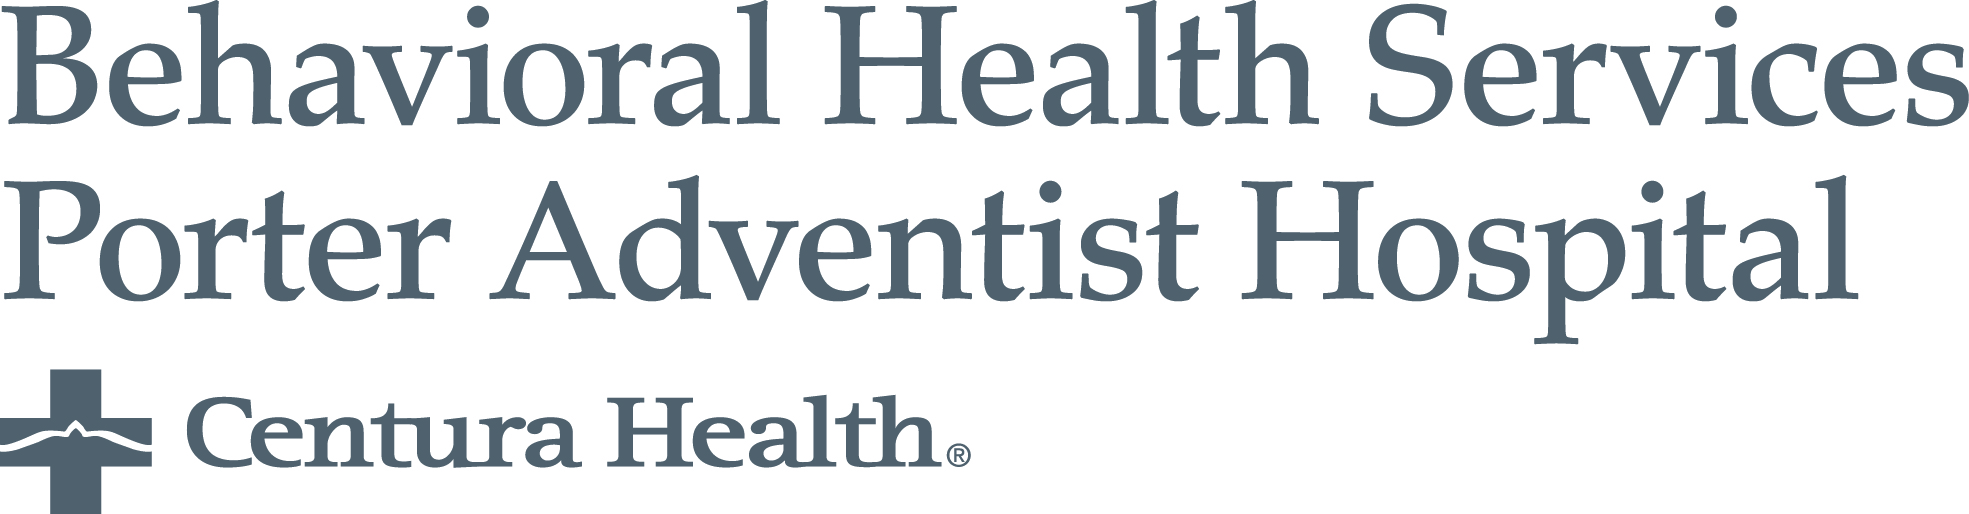 Behavioral Health Services - Porter Adventist Hospital logo